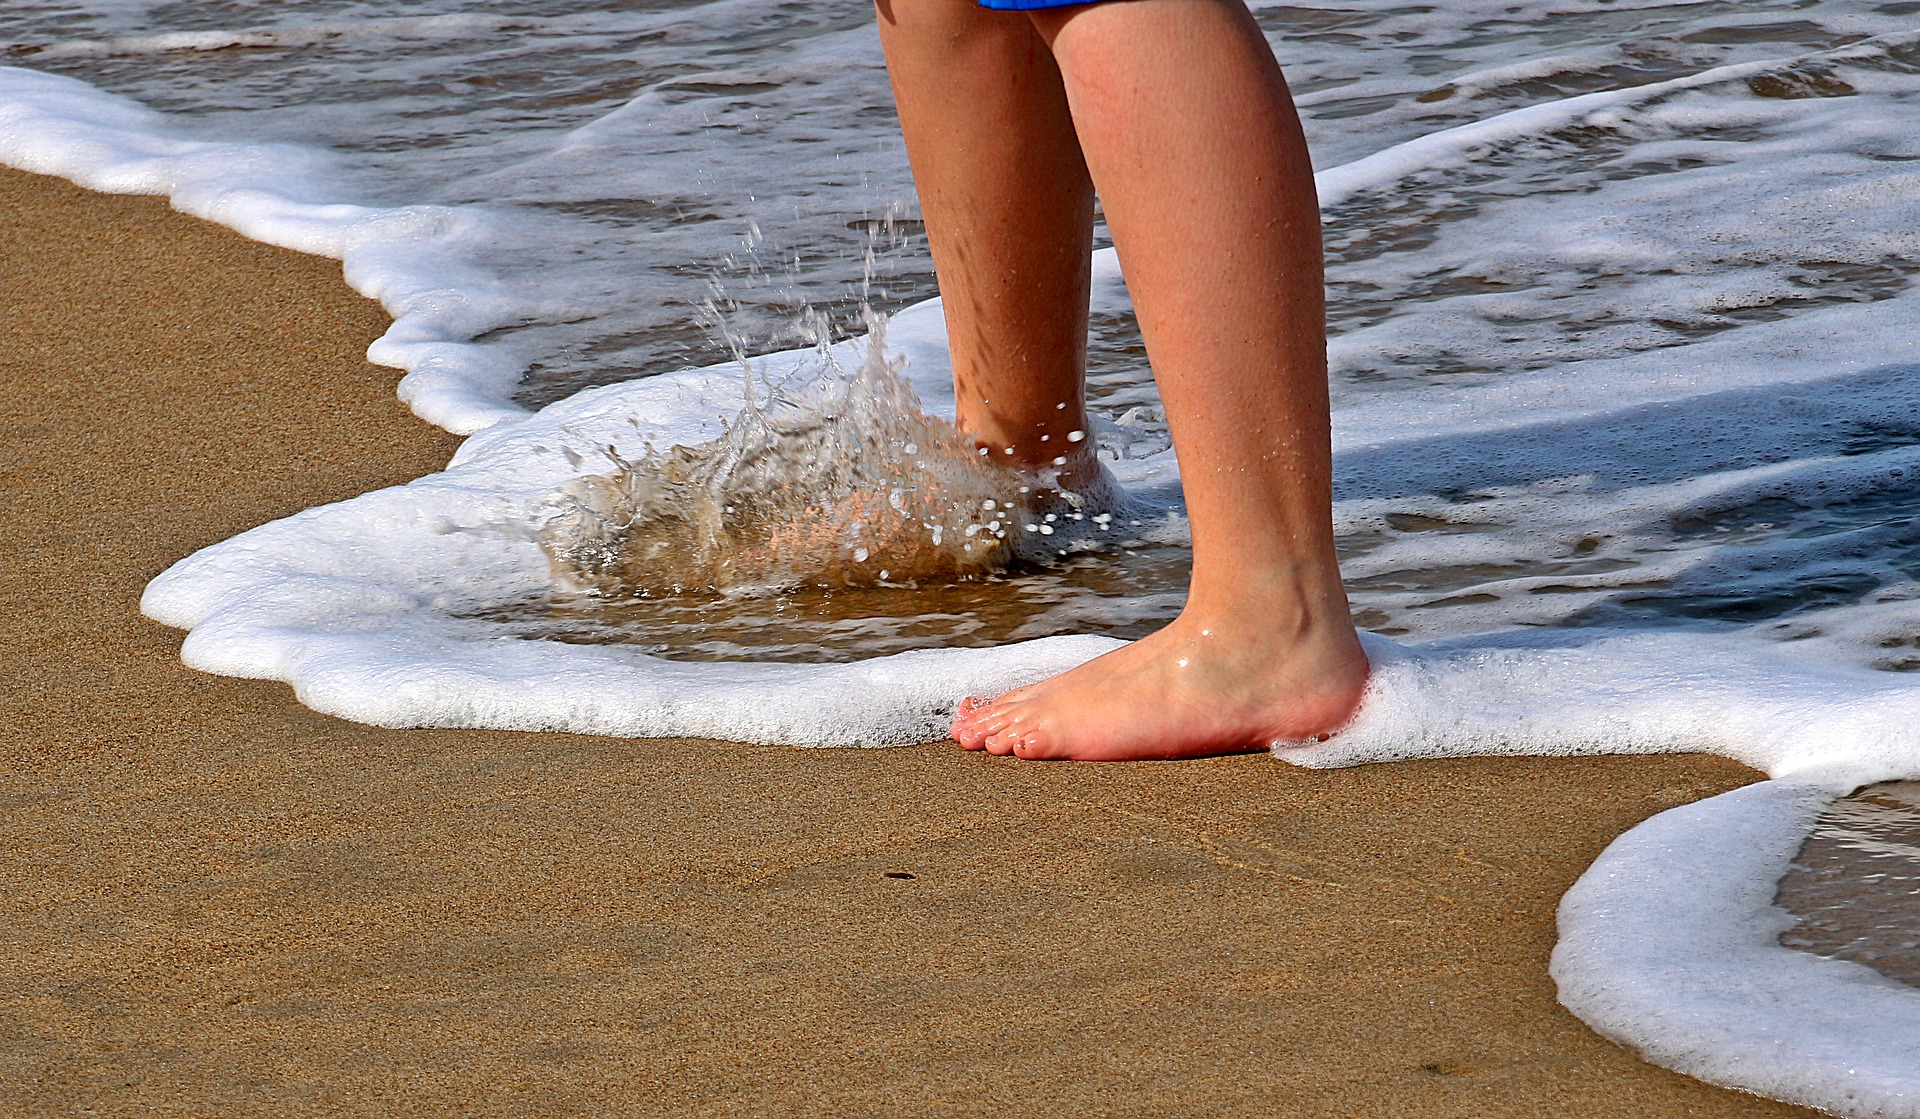 Mujer se infecta con bacteria “come carne” en playa de Florida. 
(Foto Prensa Libre: Pixabay)